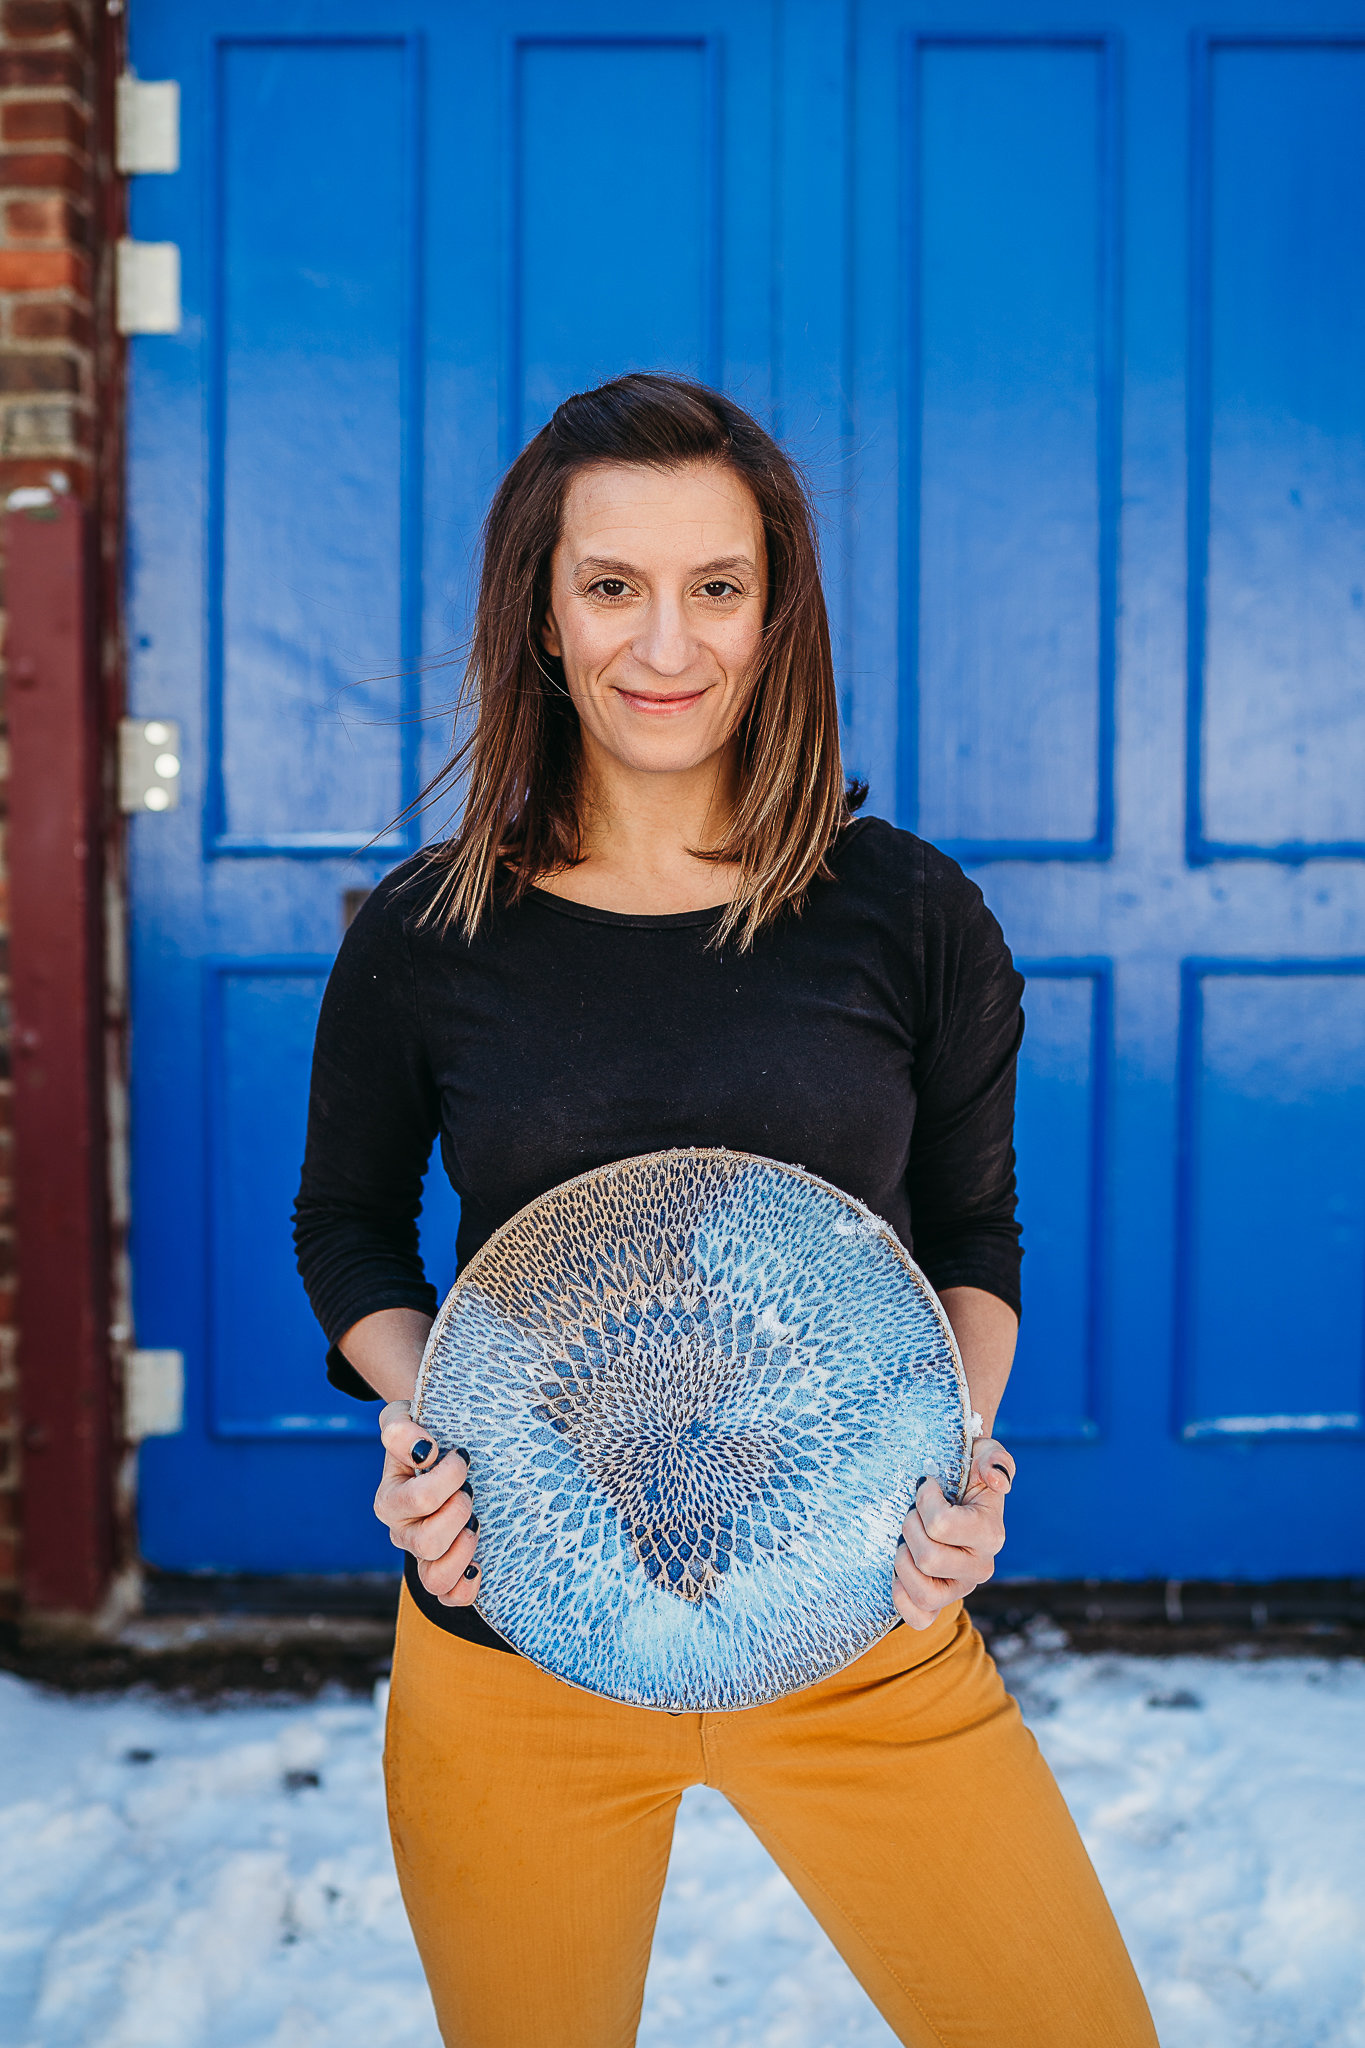 female potter holds platter in front of bright blue door